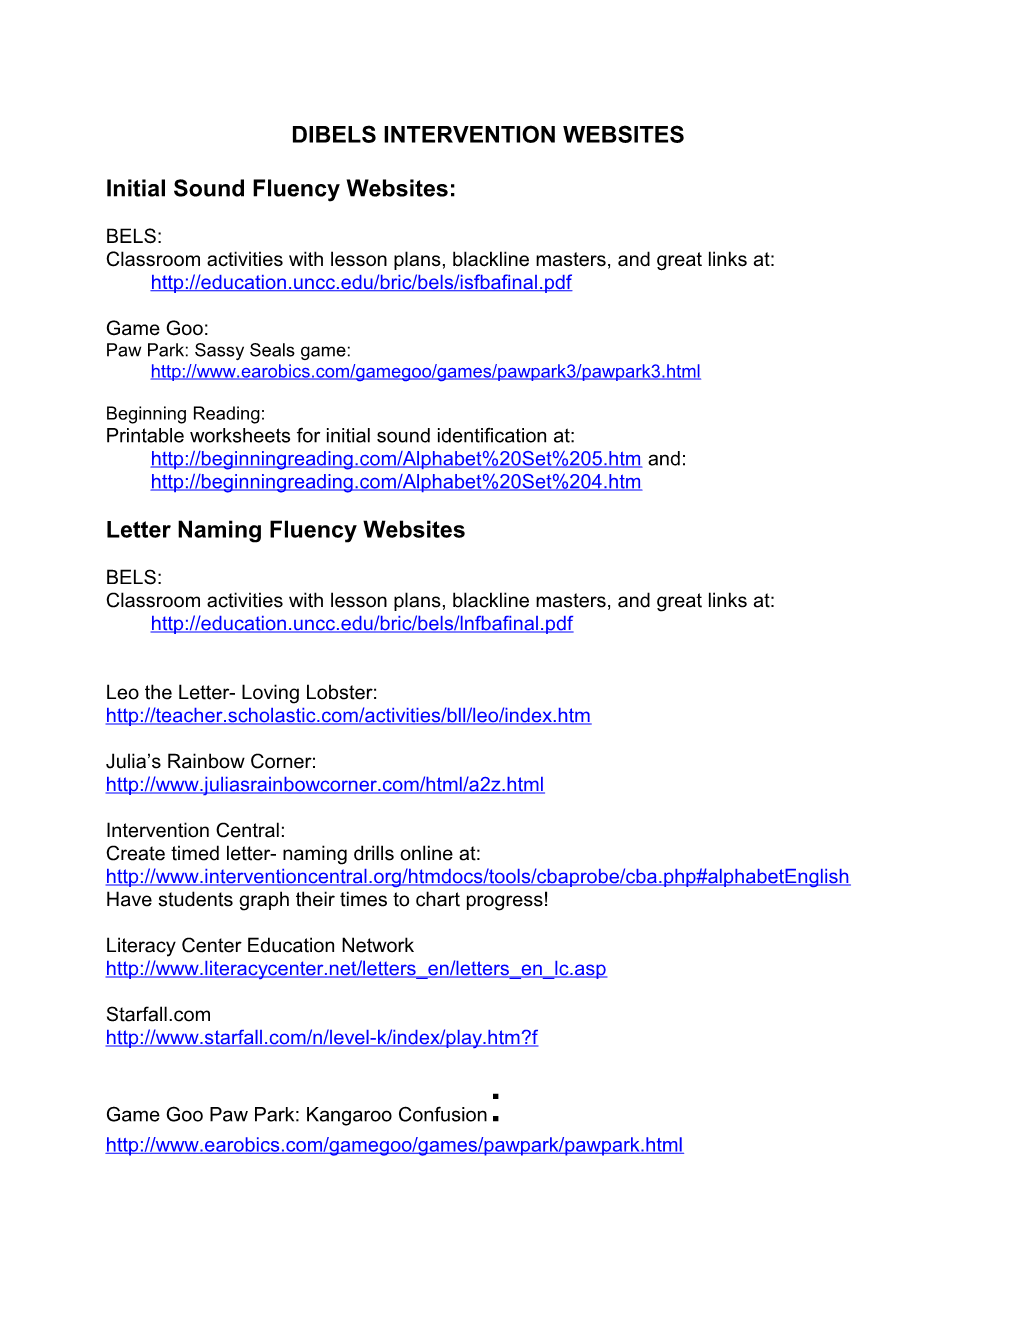 Initial Sound Fluency Websites